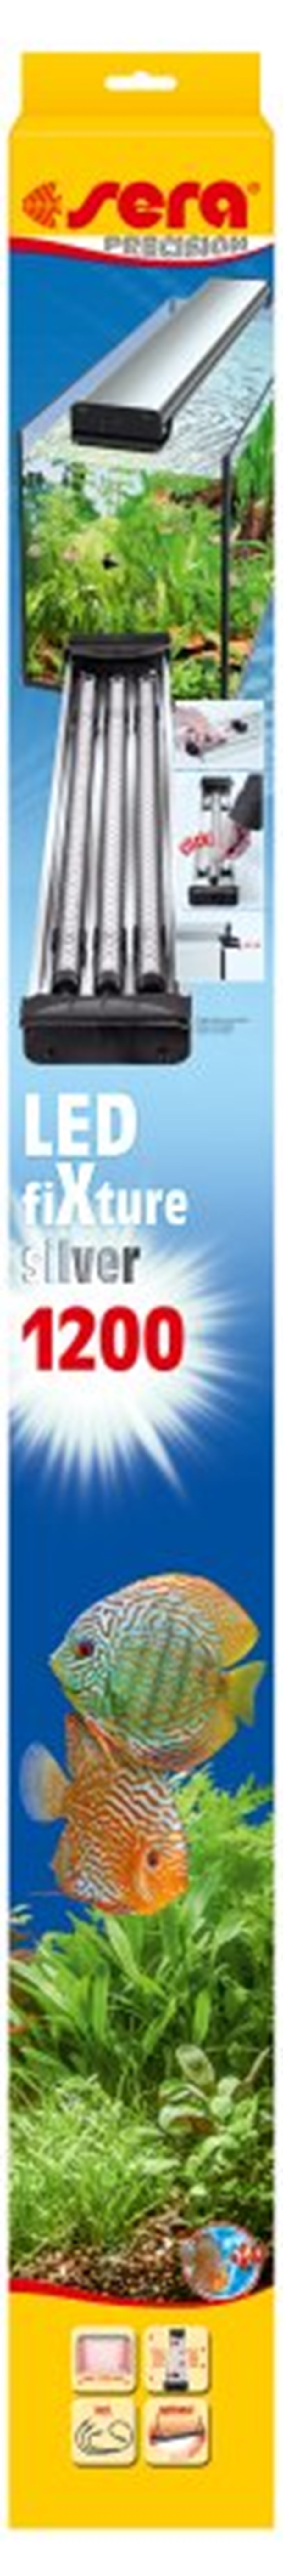 sera LED fixture silver 1200